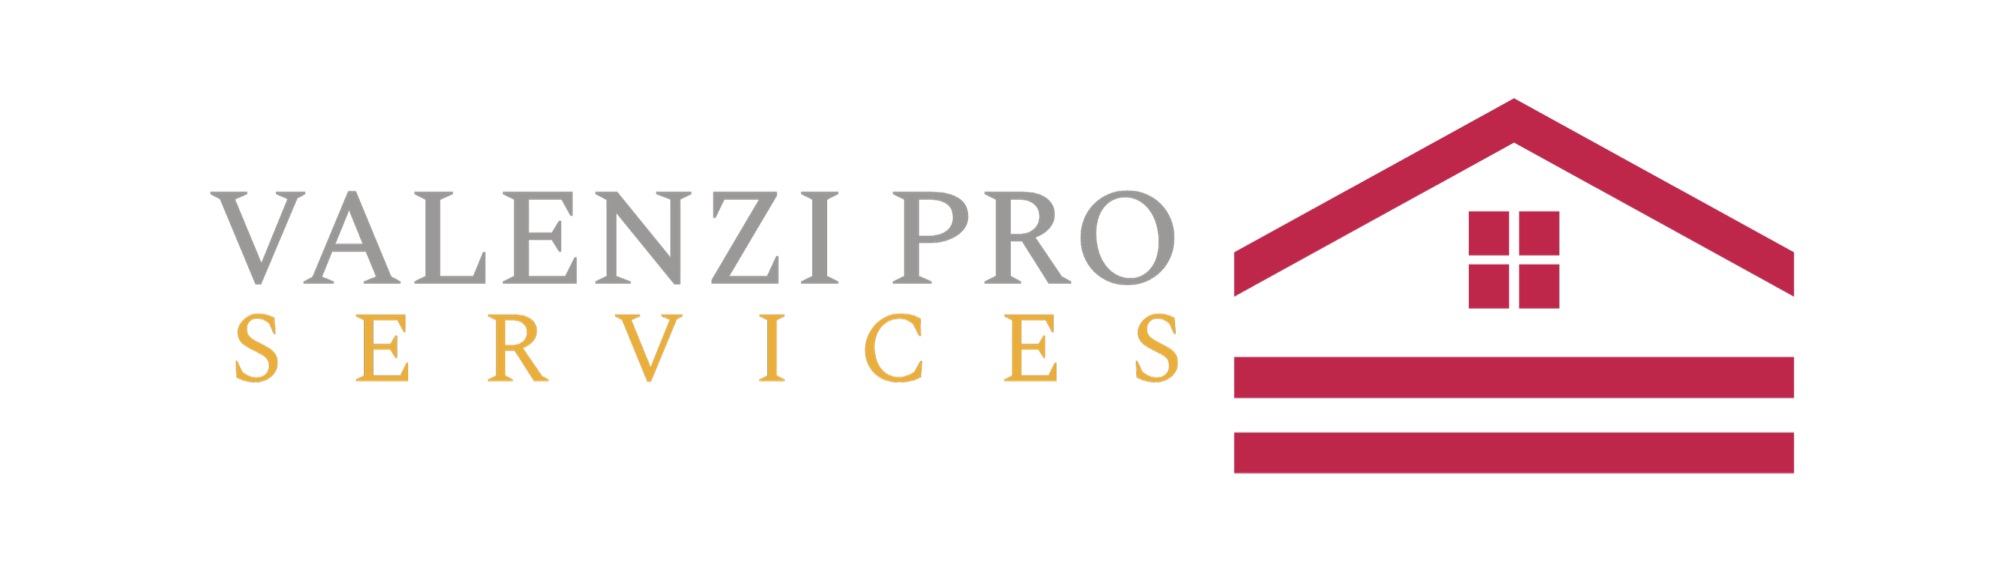 Valenzi Pro Services Logo